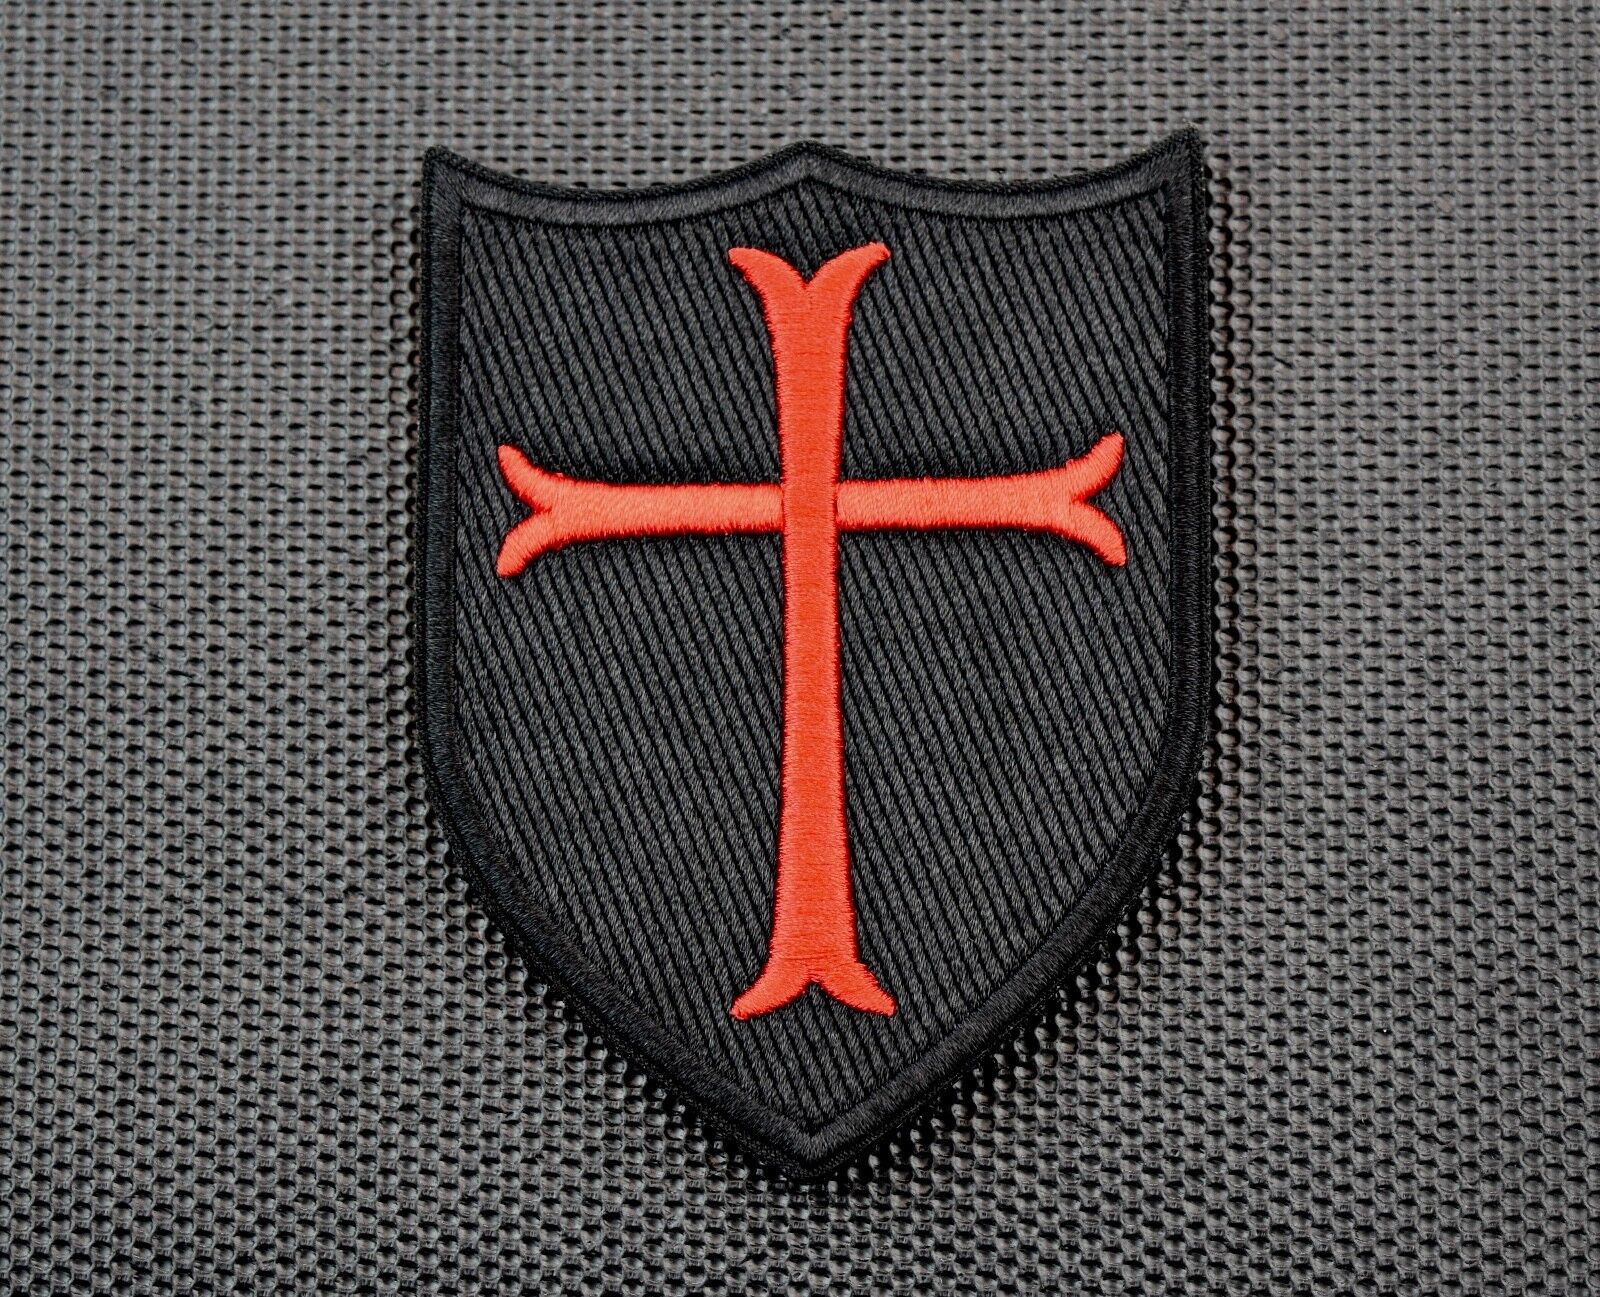 Premium Embroidered Crusader Cross Shield Navy SEAL DEVGRU Morale Patch